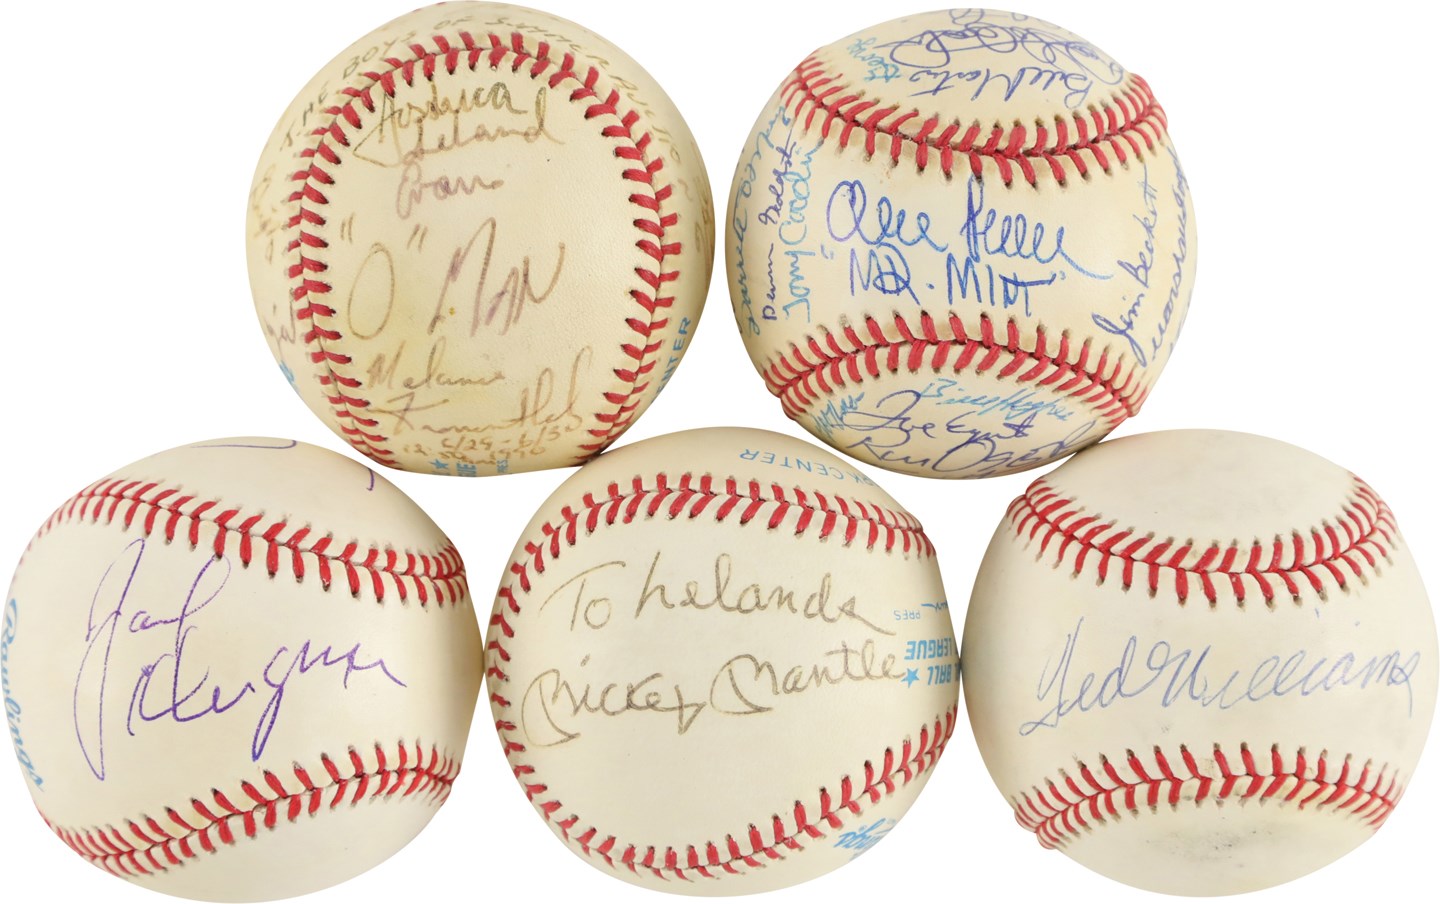 - The Joshua Leland Evans Signed Baseball Collection